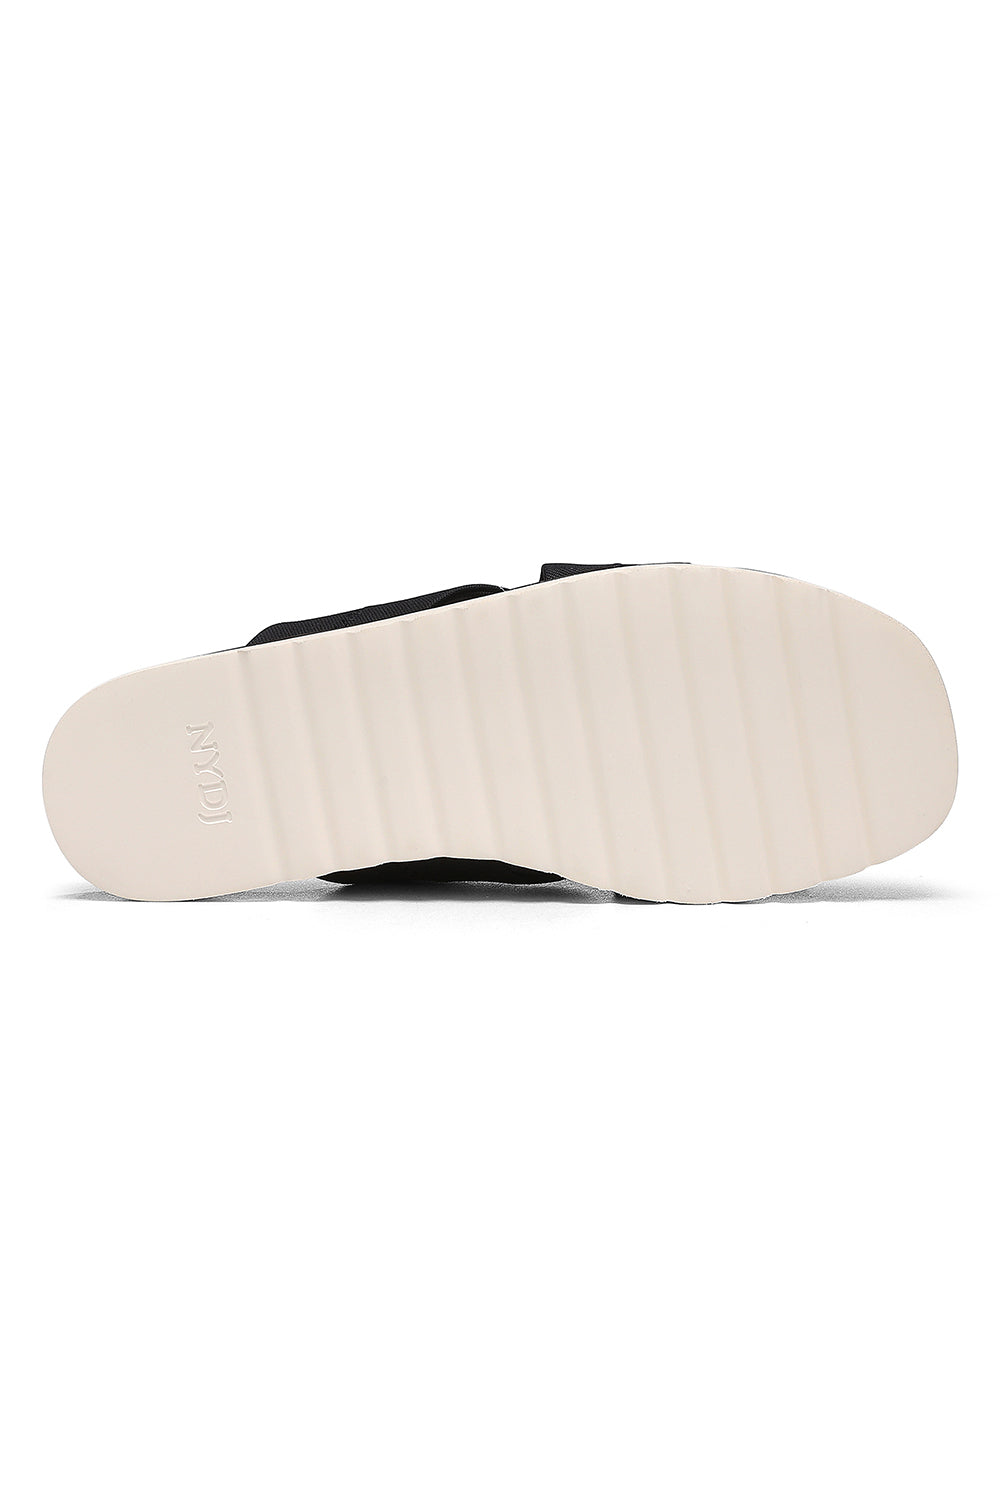 NYDJ Ronna Flat Sandals In BlueLast™ Denim - Indigo